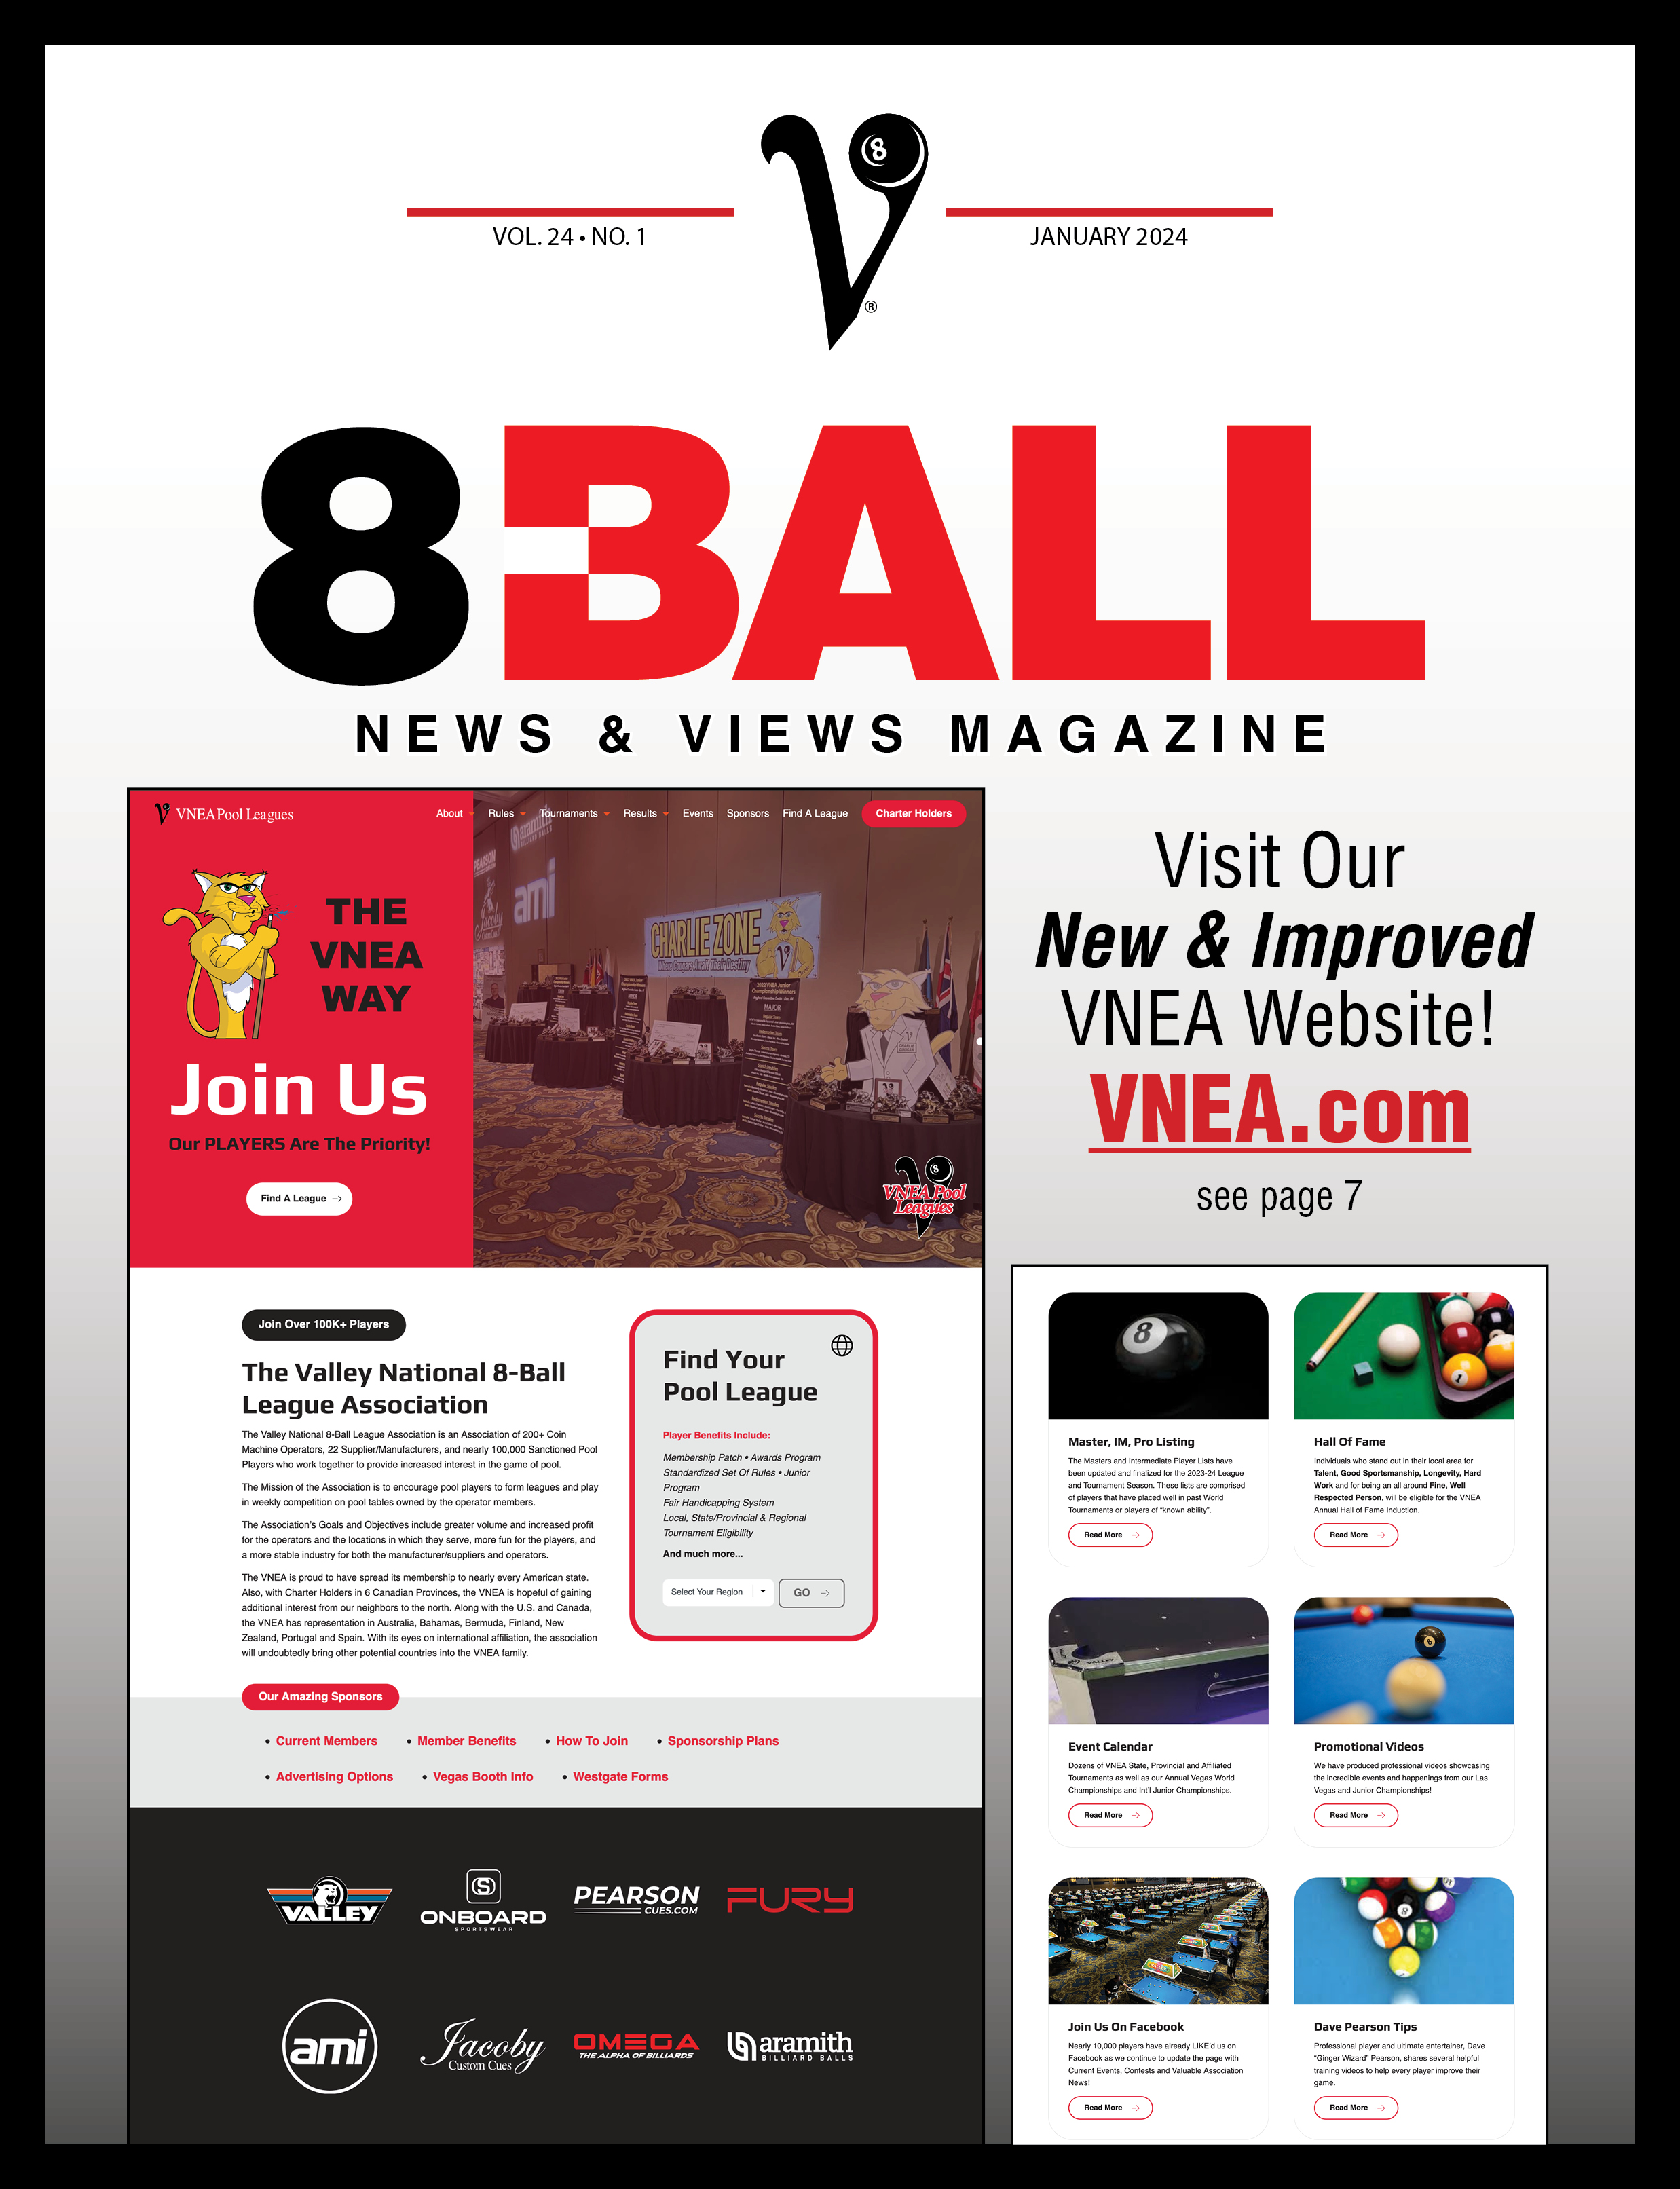 8-Ball News & Views Magazine